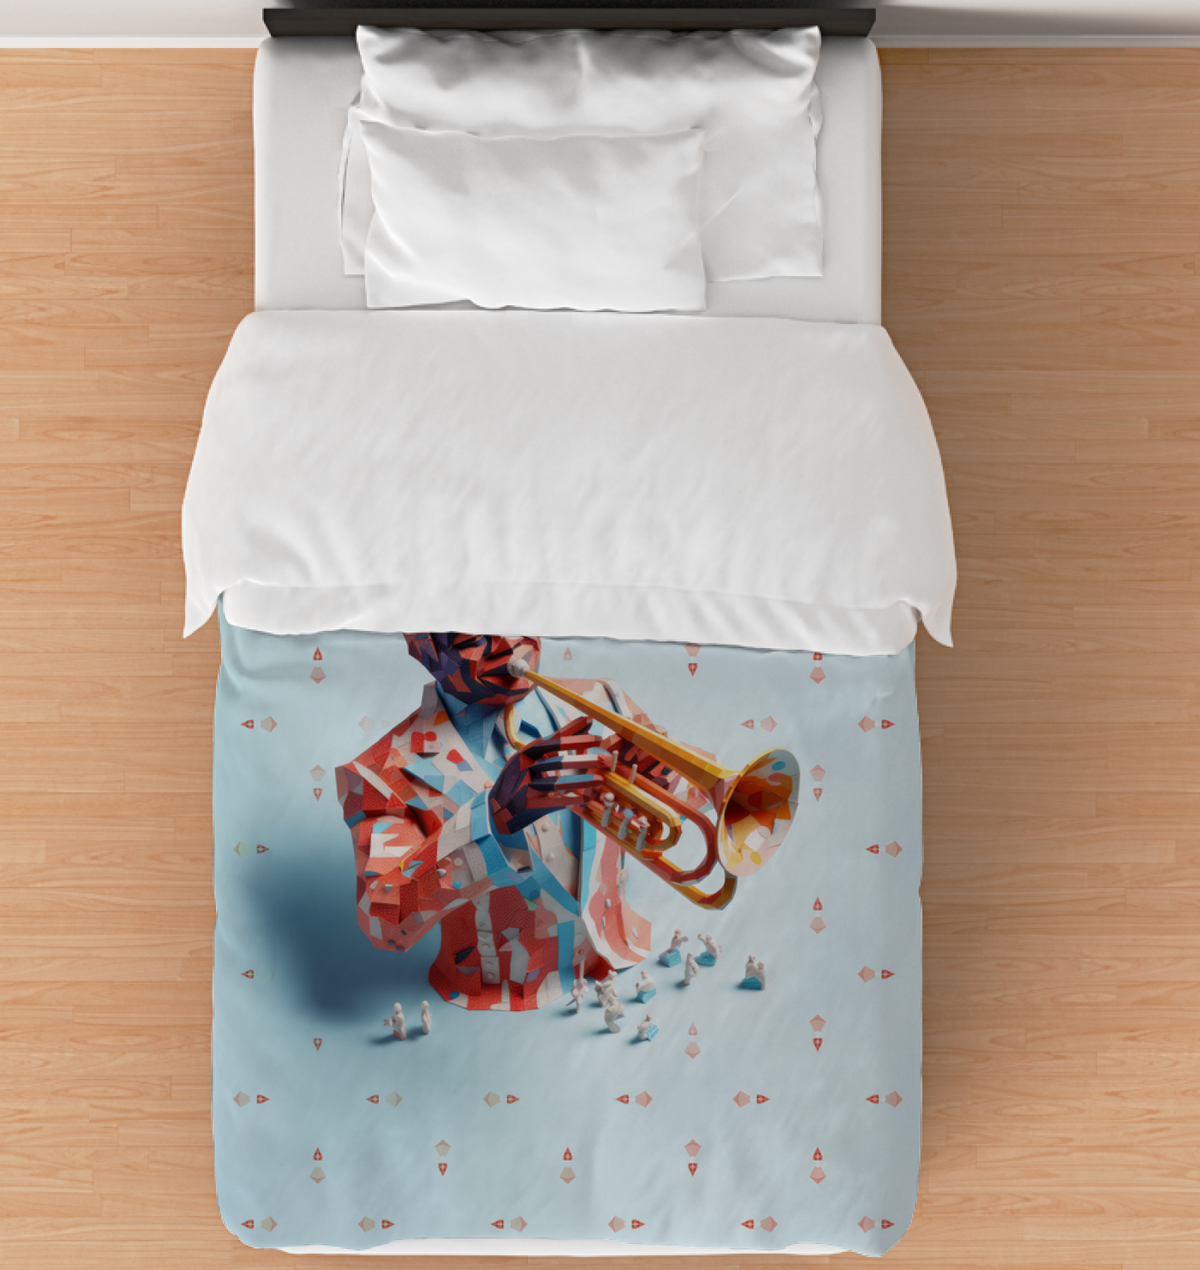 Geometric Harmony Comforter on bed, showcasing modern pattern.